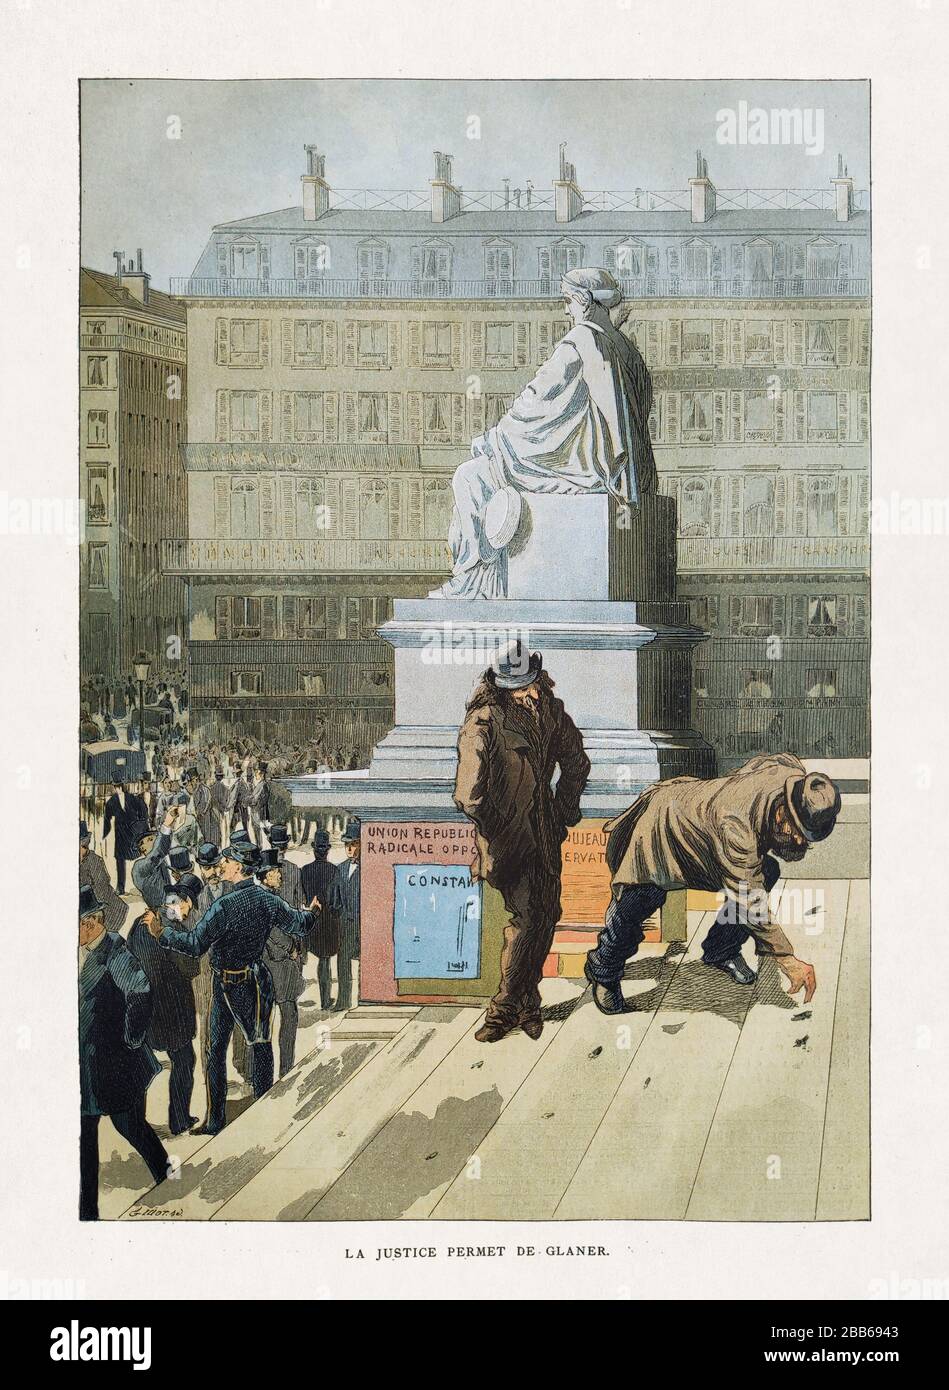 Illustration of a people at the Bourse de Paris entitled 'La justice permet de glaner' by Guiot published in 1885. Stock Photo